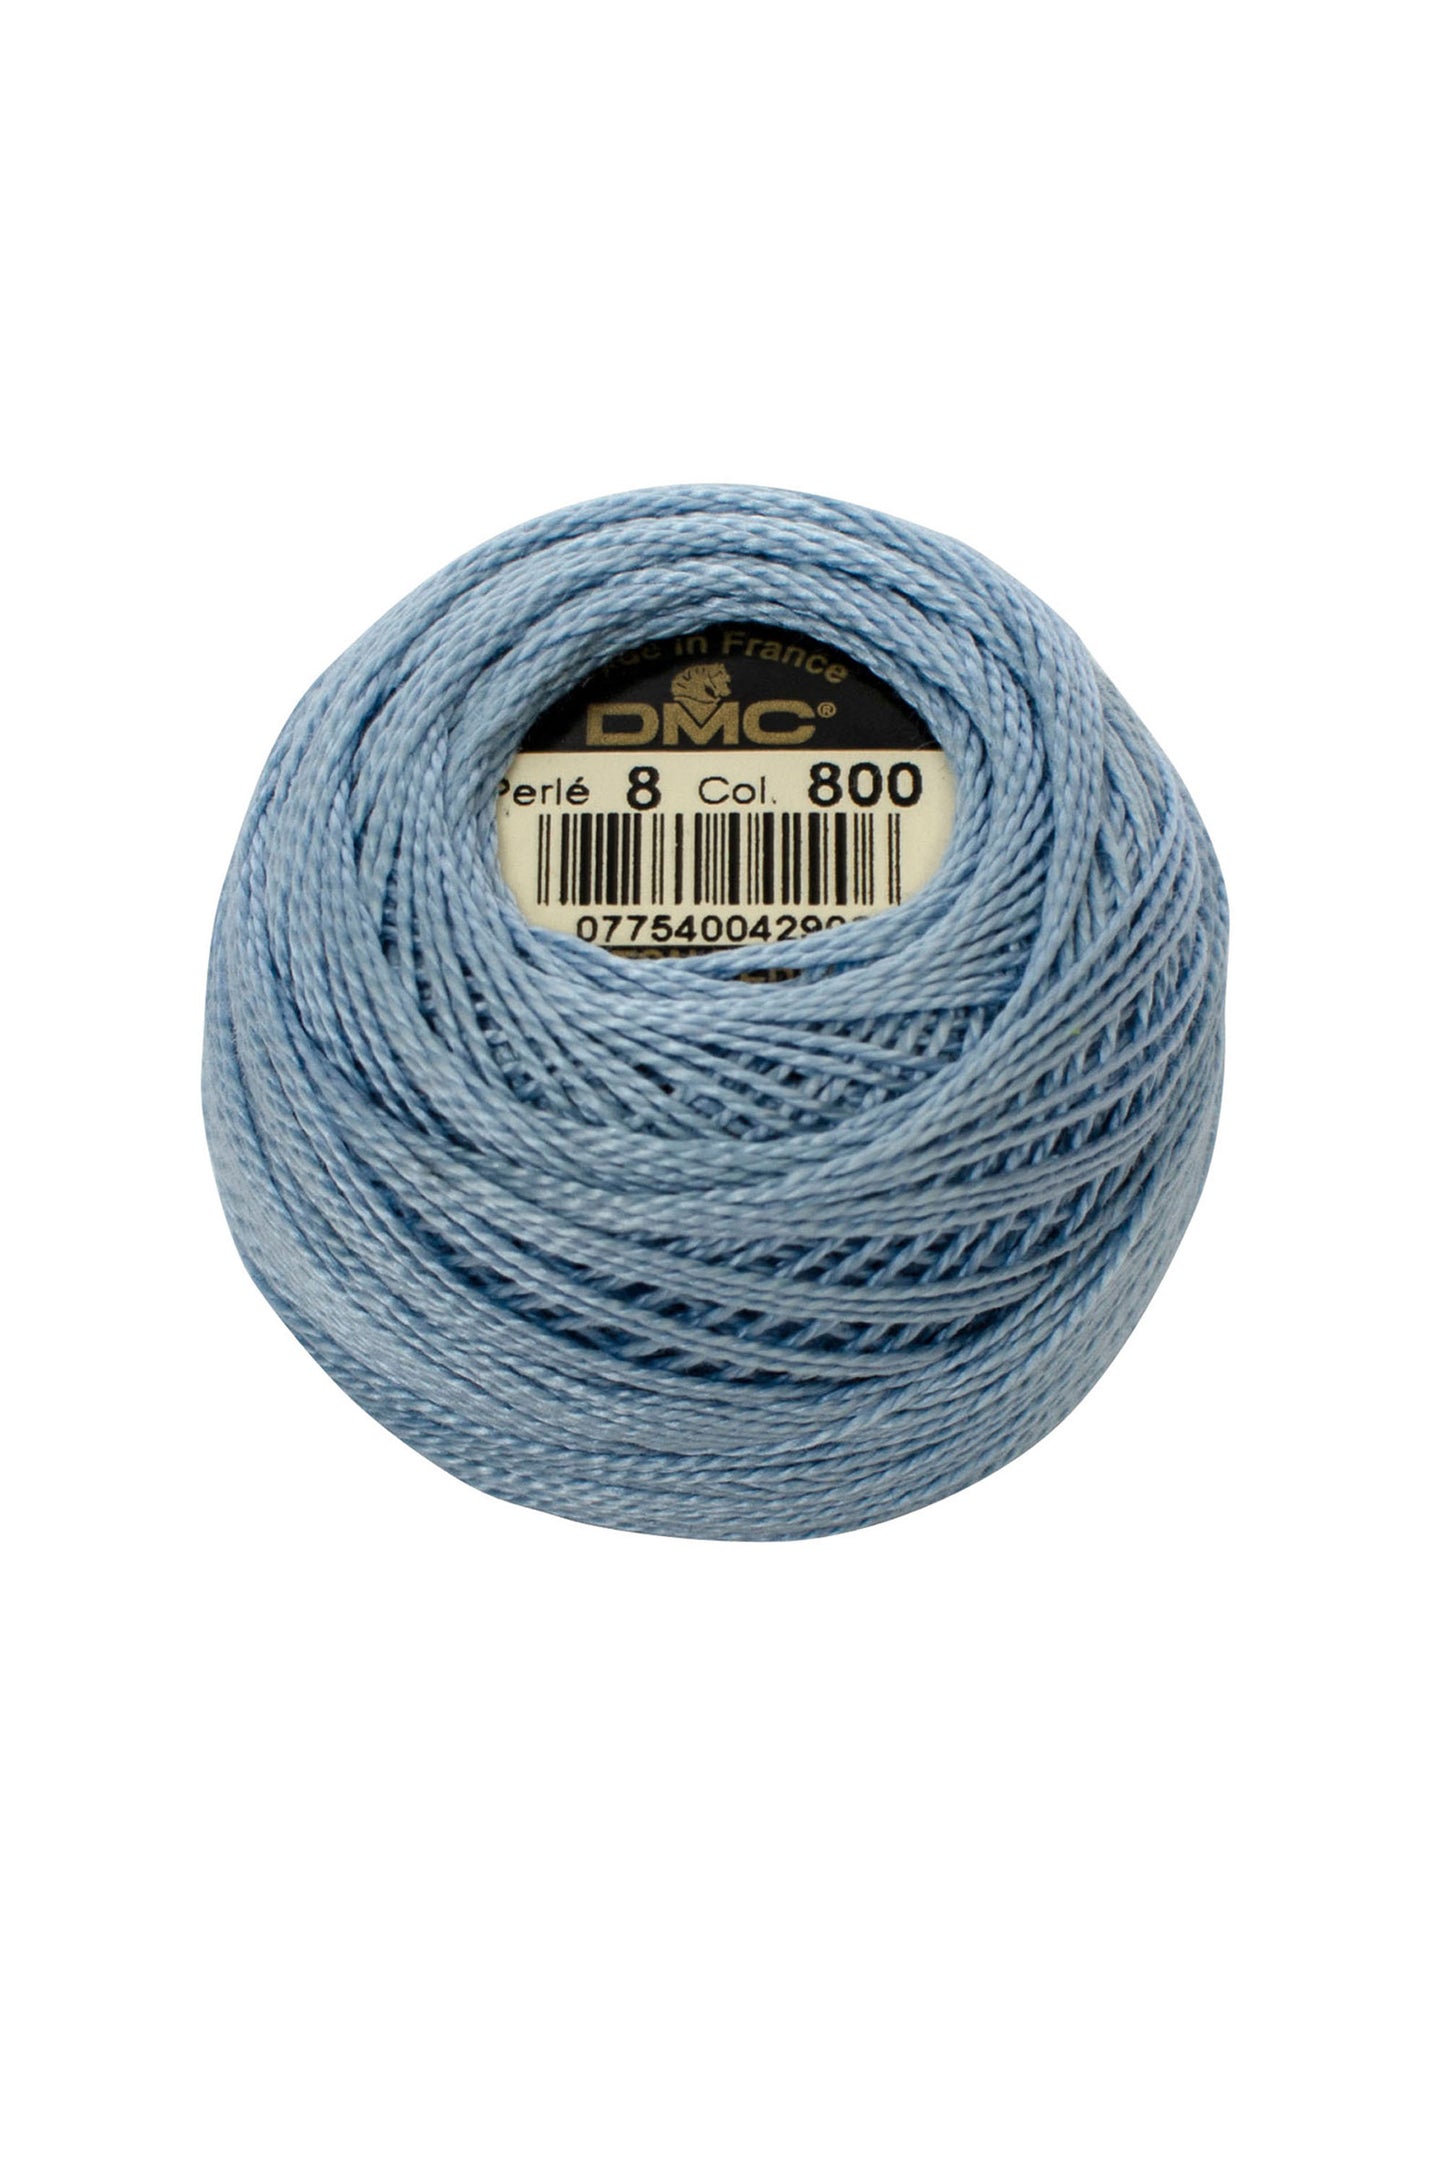 800 Pale Delft Blue - DMC #8 Perle Cotton Ball